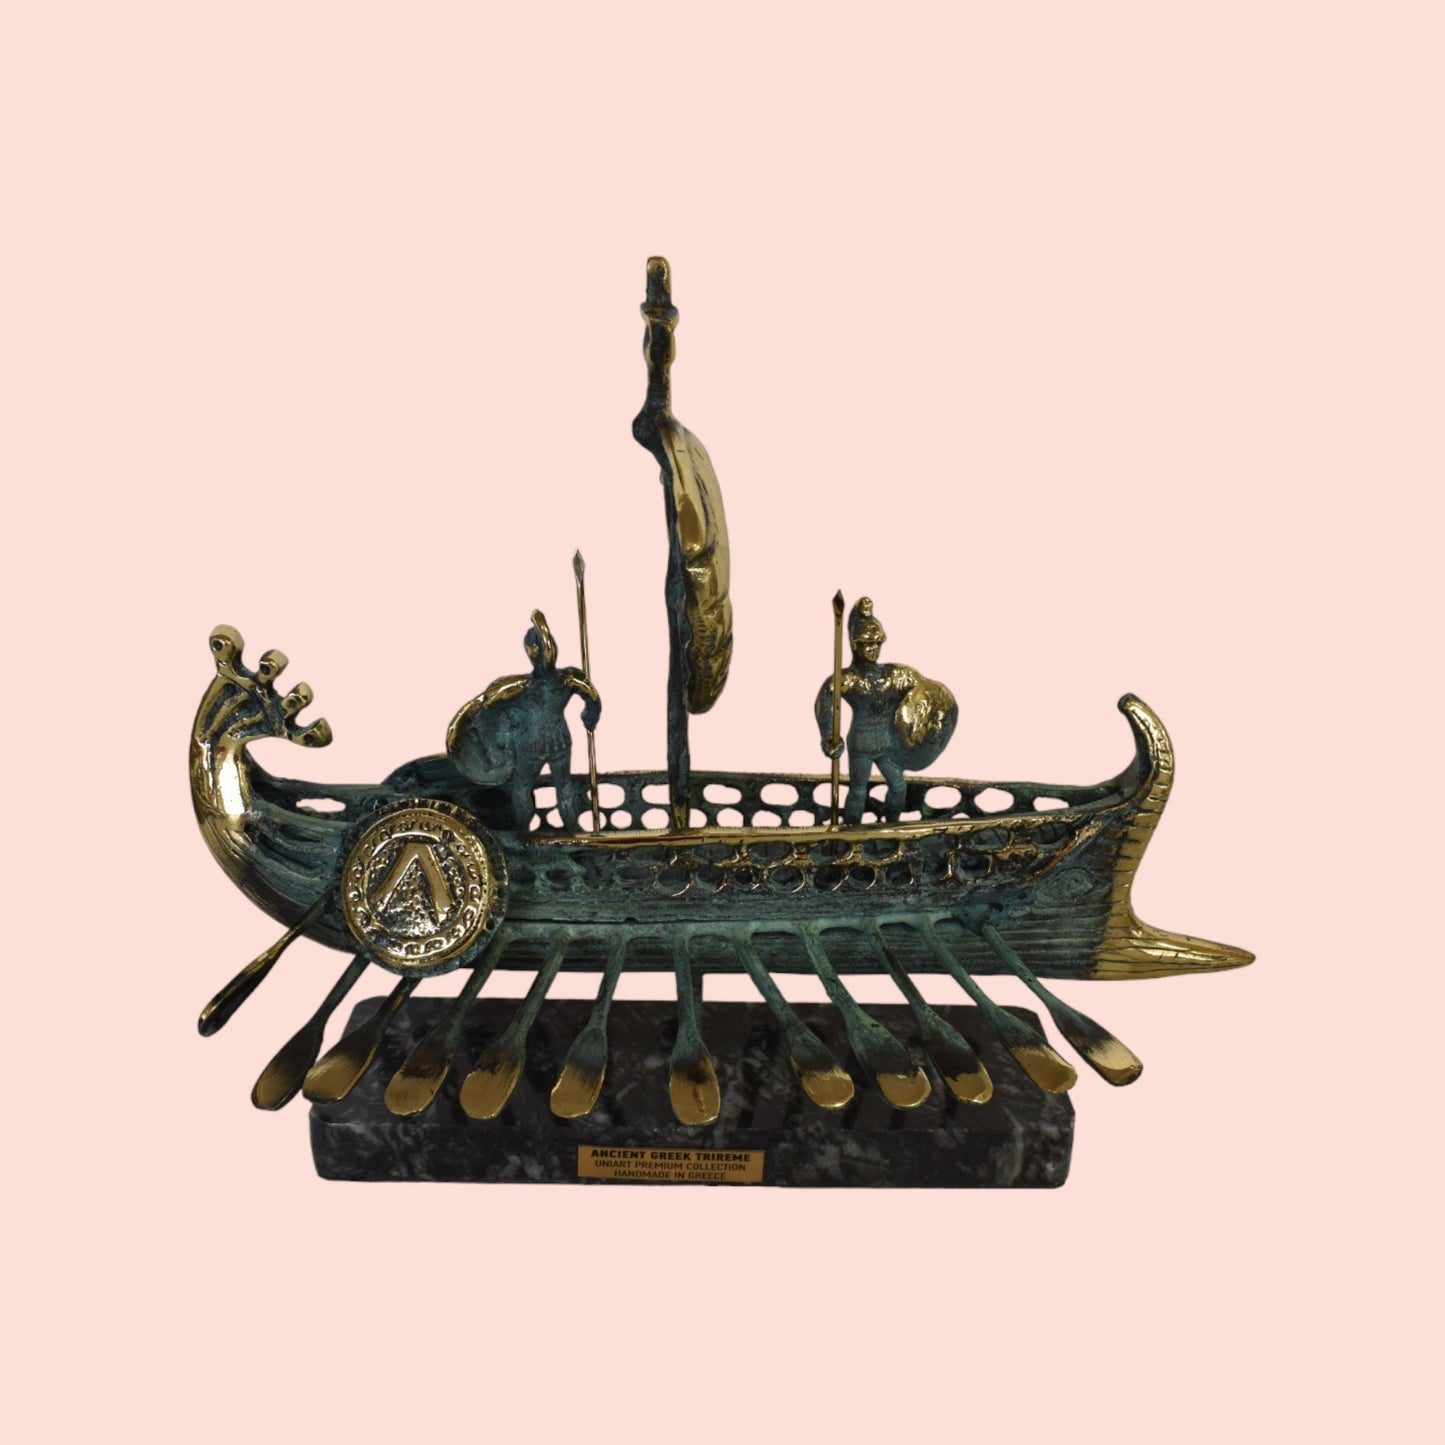 Trireme - Spartan Warship - Greco-Persian War - Salamis Battleship - 480 BC - pure bronze  statue